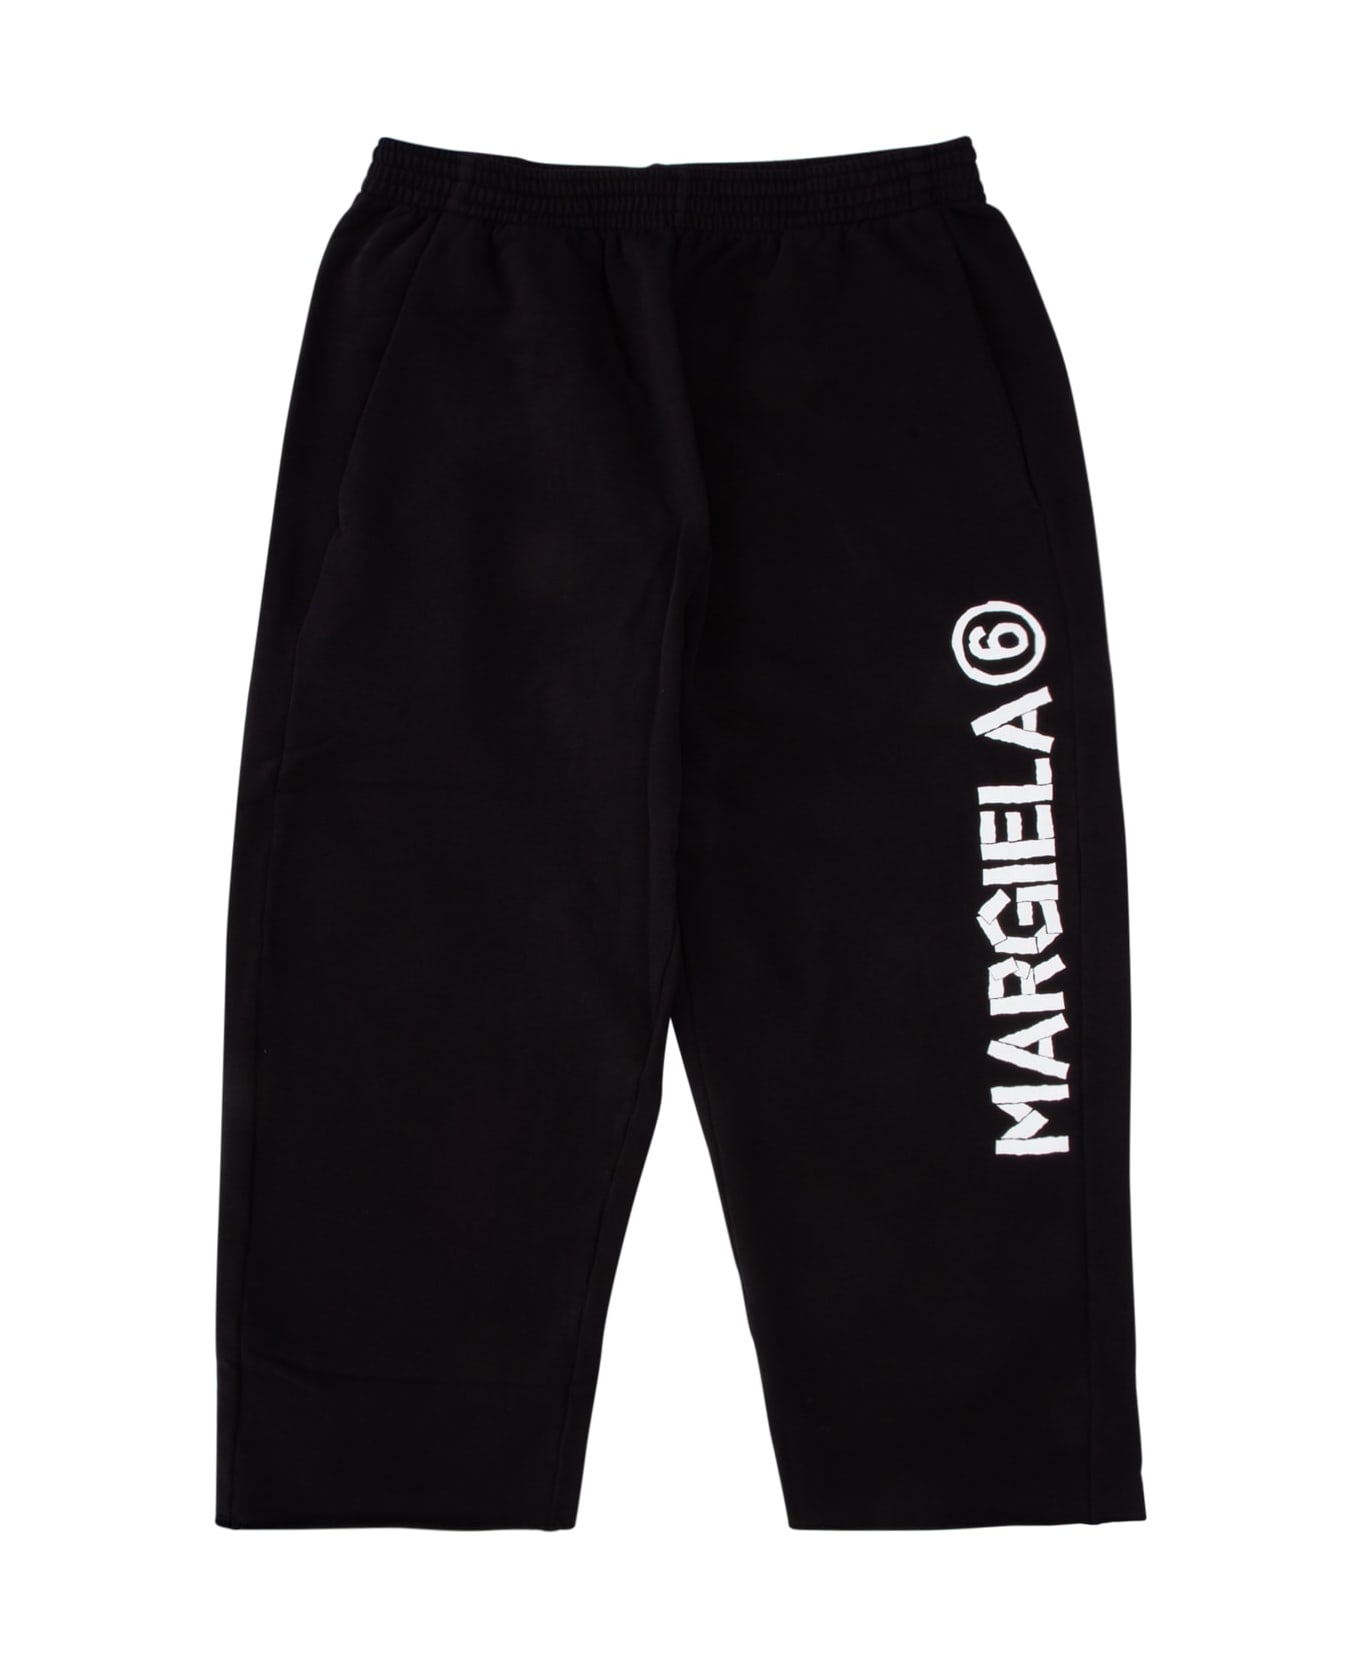 MM6 Maison Margiela Pantalone - M6900